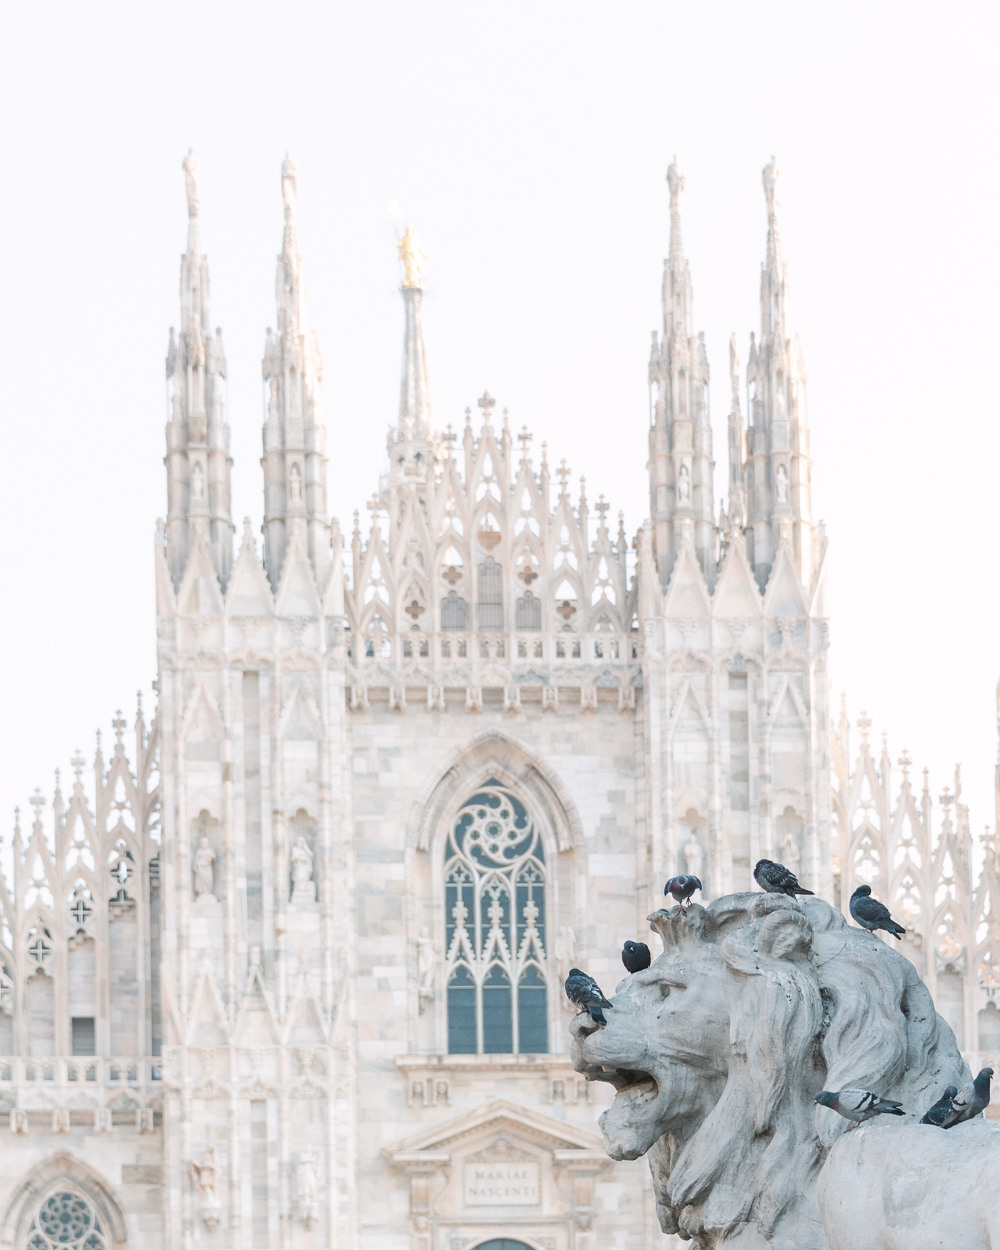 The Milan Duomo in Italy